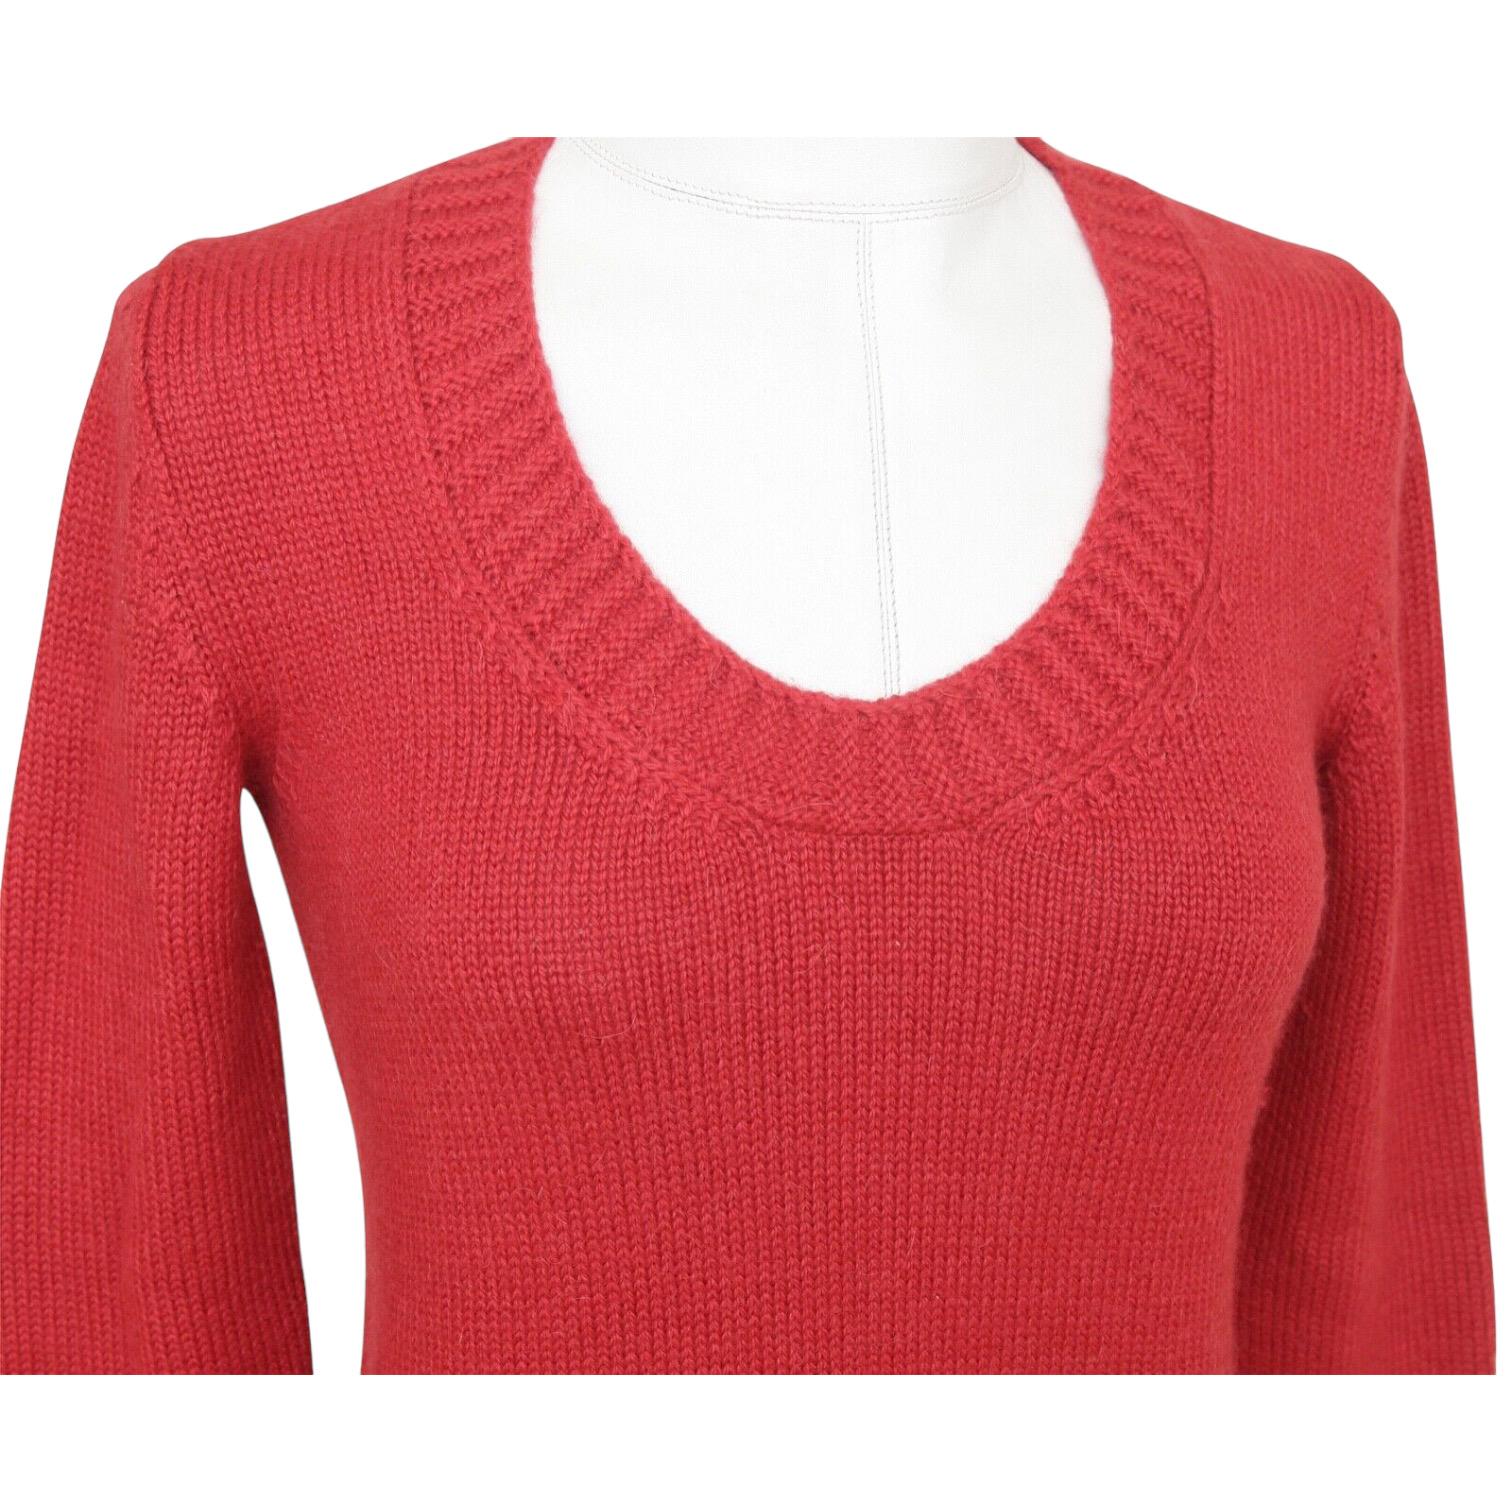 Women's CHLOE Sweater Knit Top Shirt Long Sleeve Red Alpaca Scoop Neck Sz XS For Sale